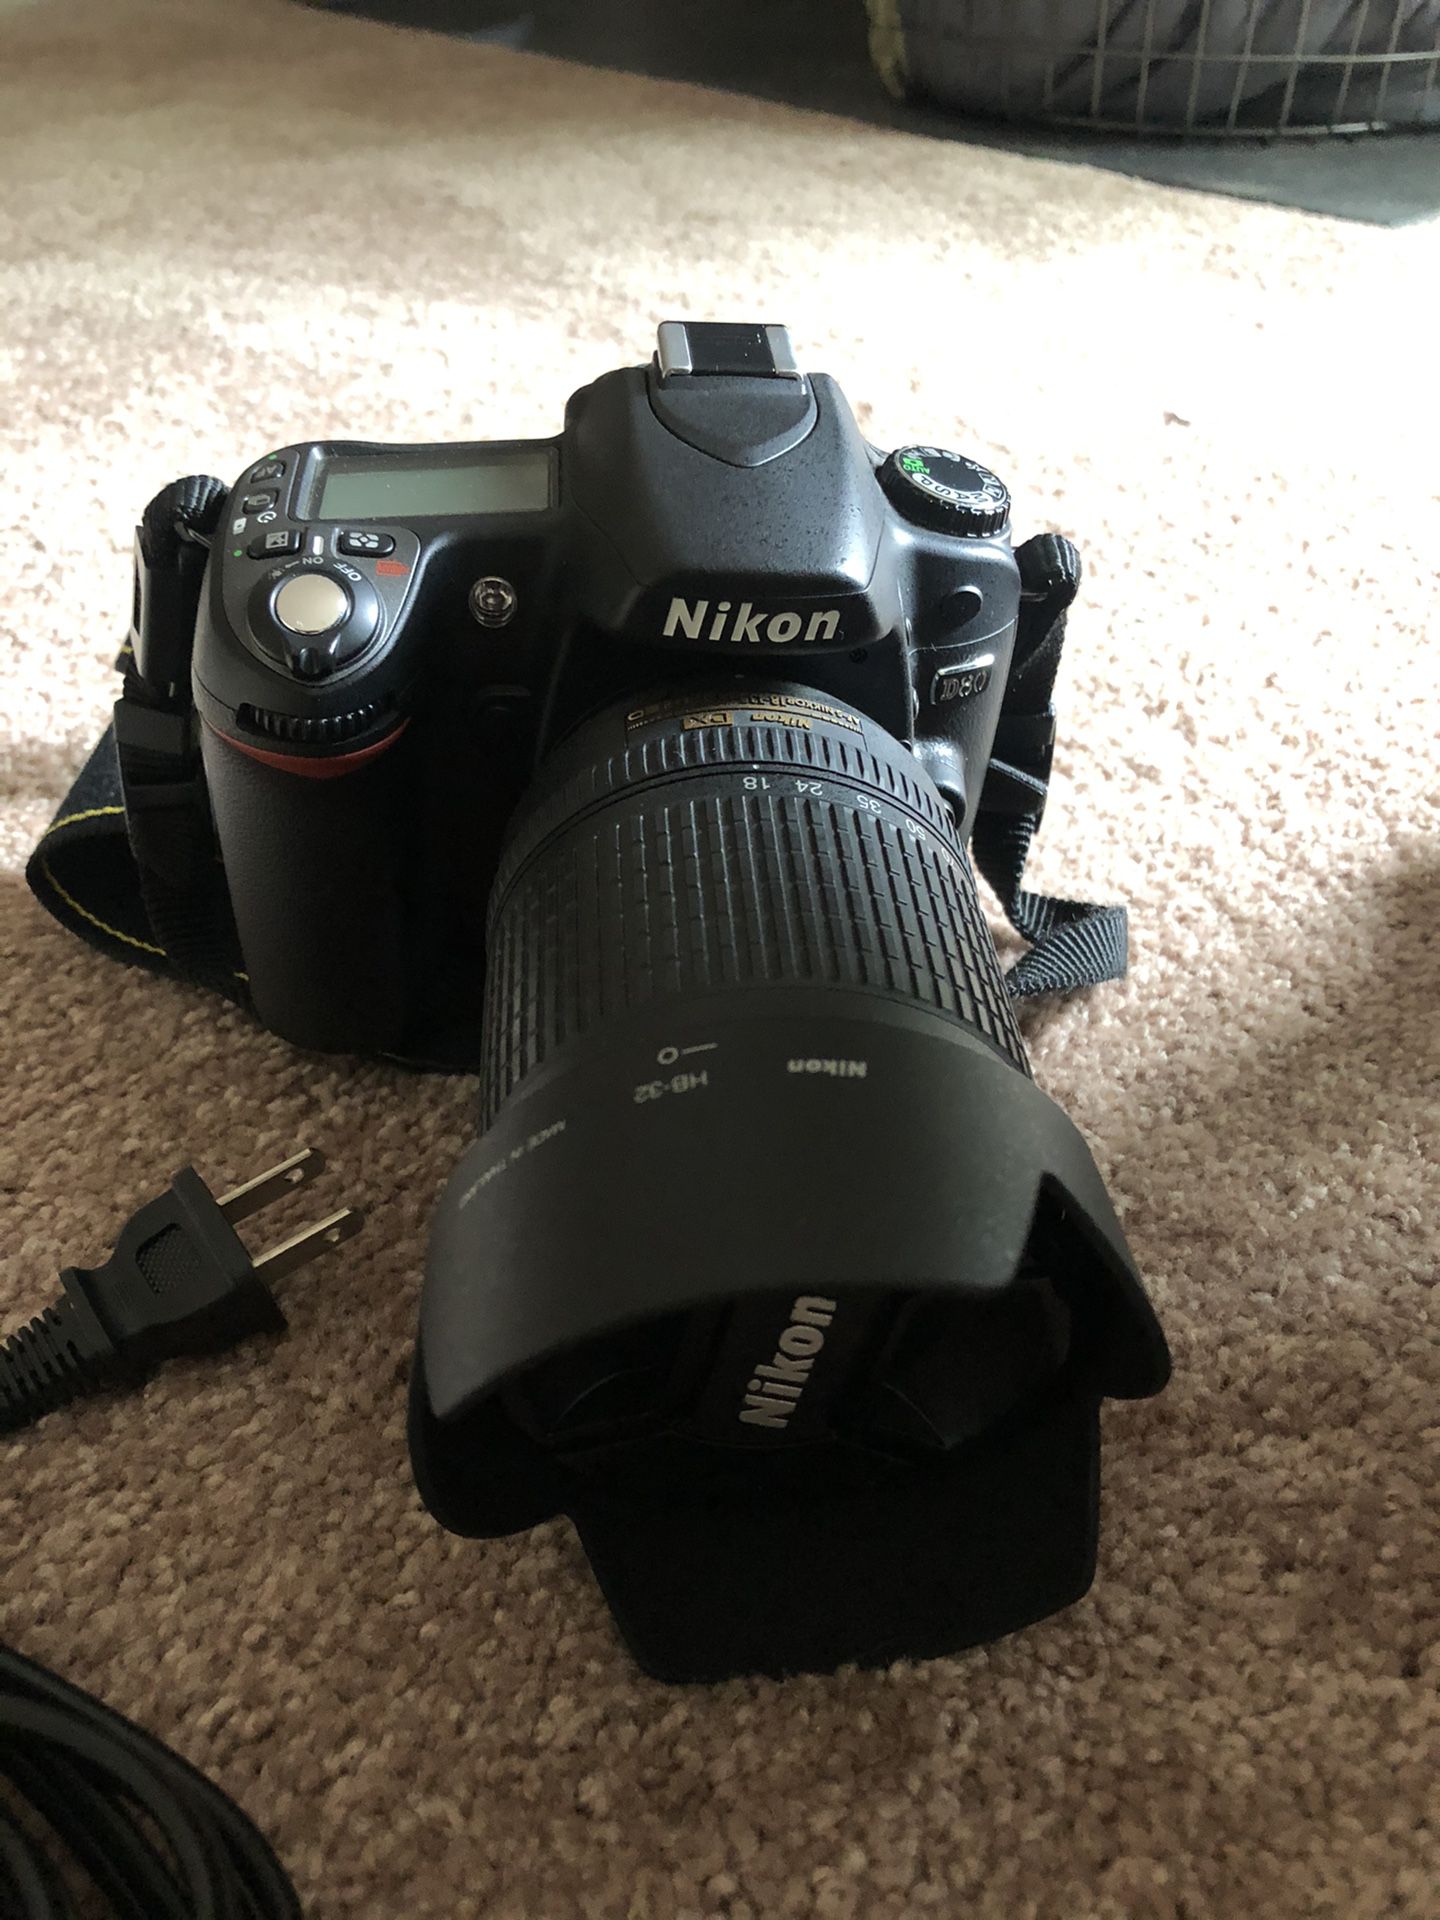 Nikon D80 Digital SLR Camera - (Kit w/18-135mm Lens) Original Box And Travel Bag